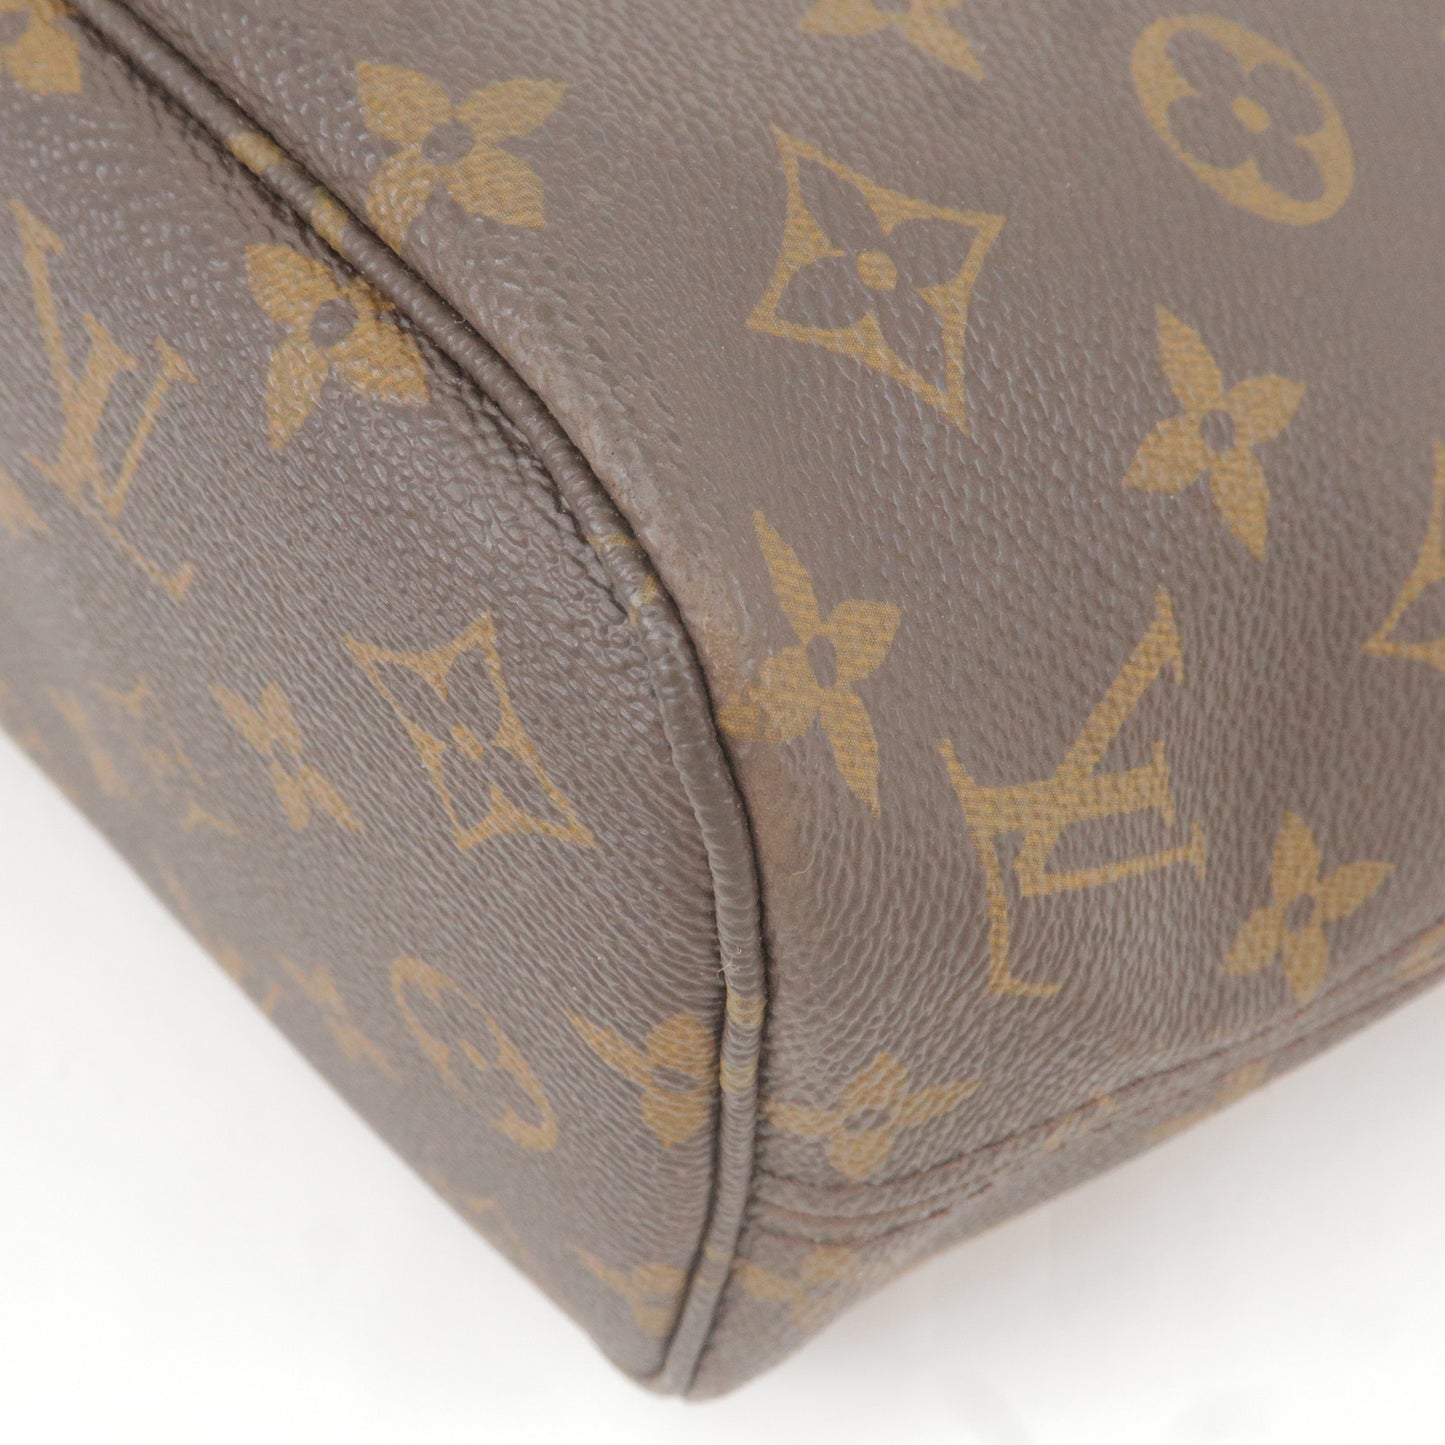 Louis Vuitton Monogram Neverfull PM Tote Bag M40155